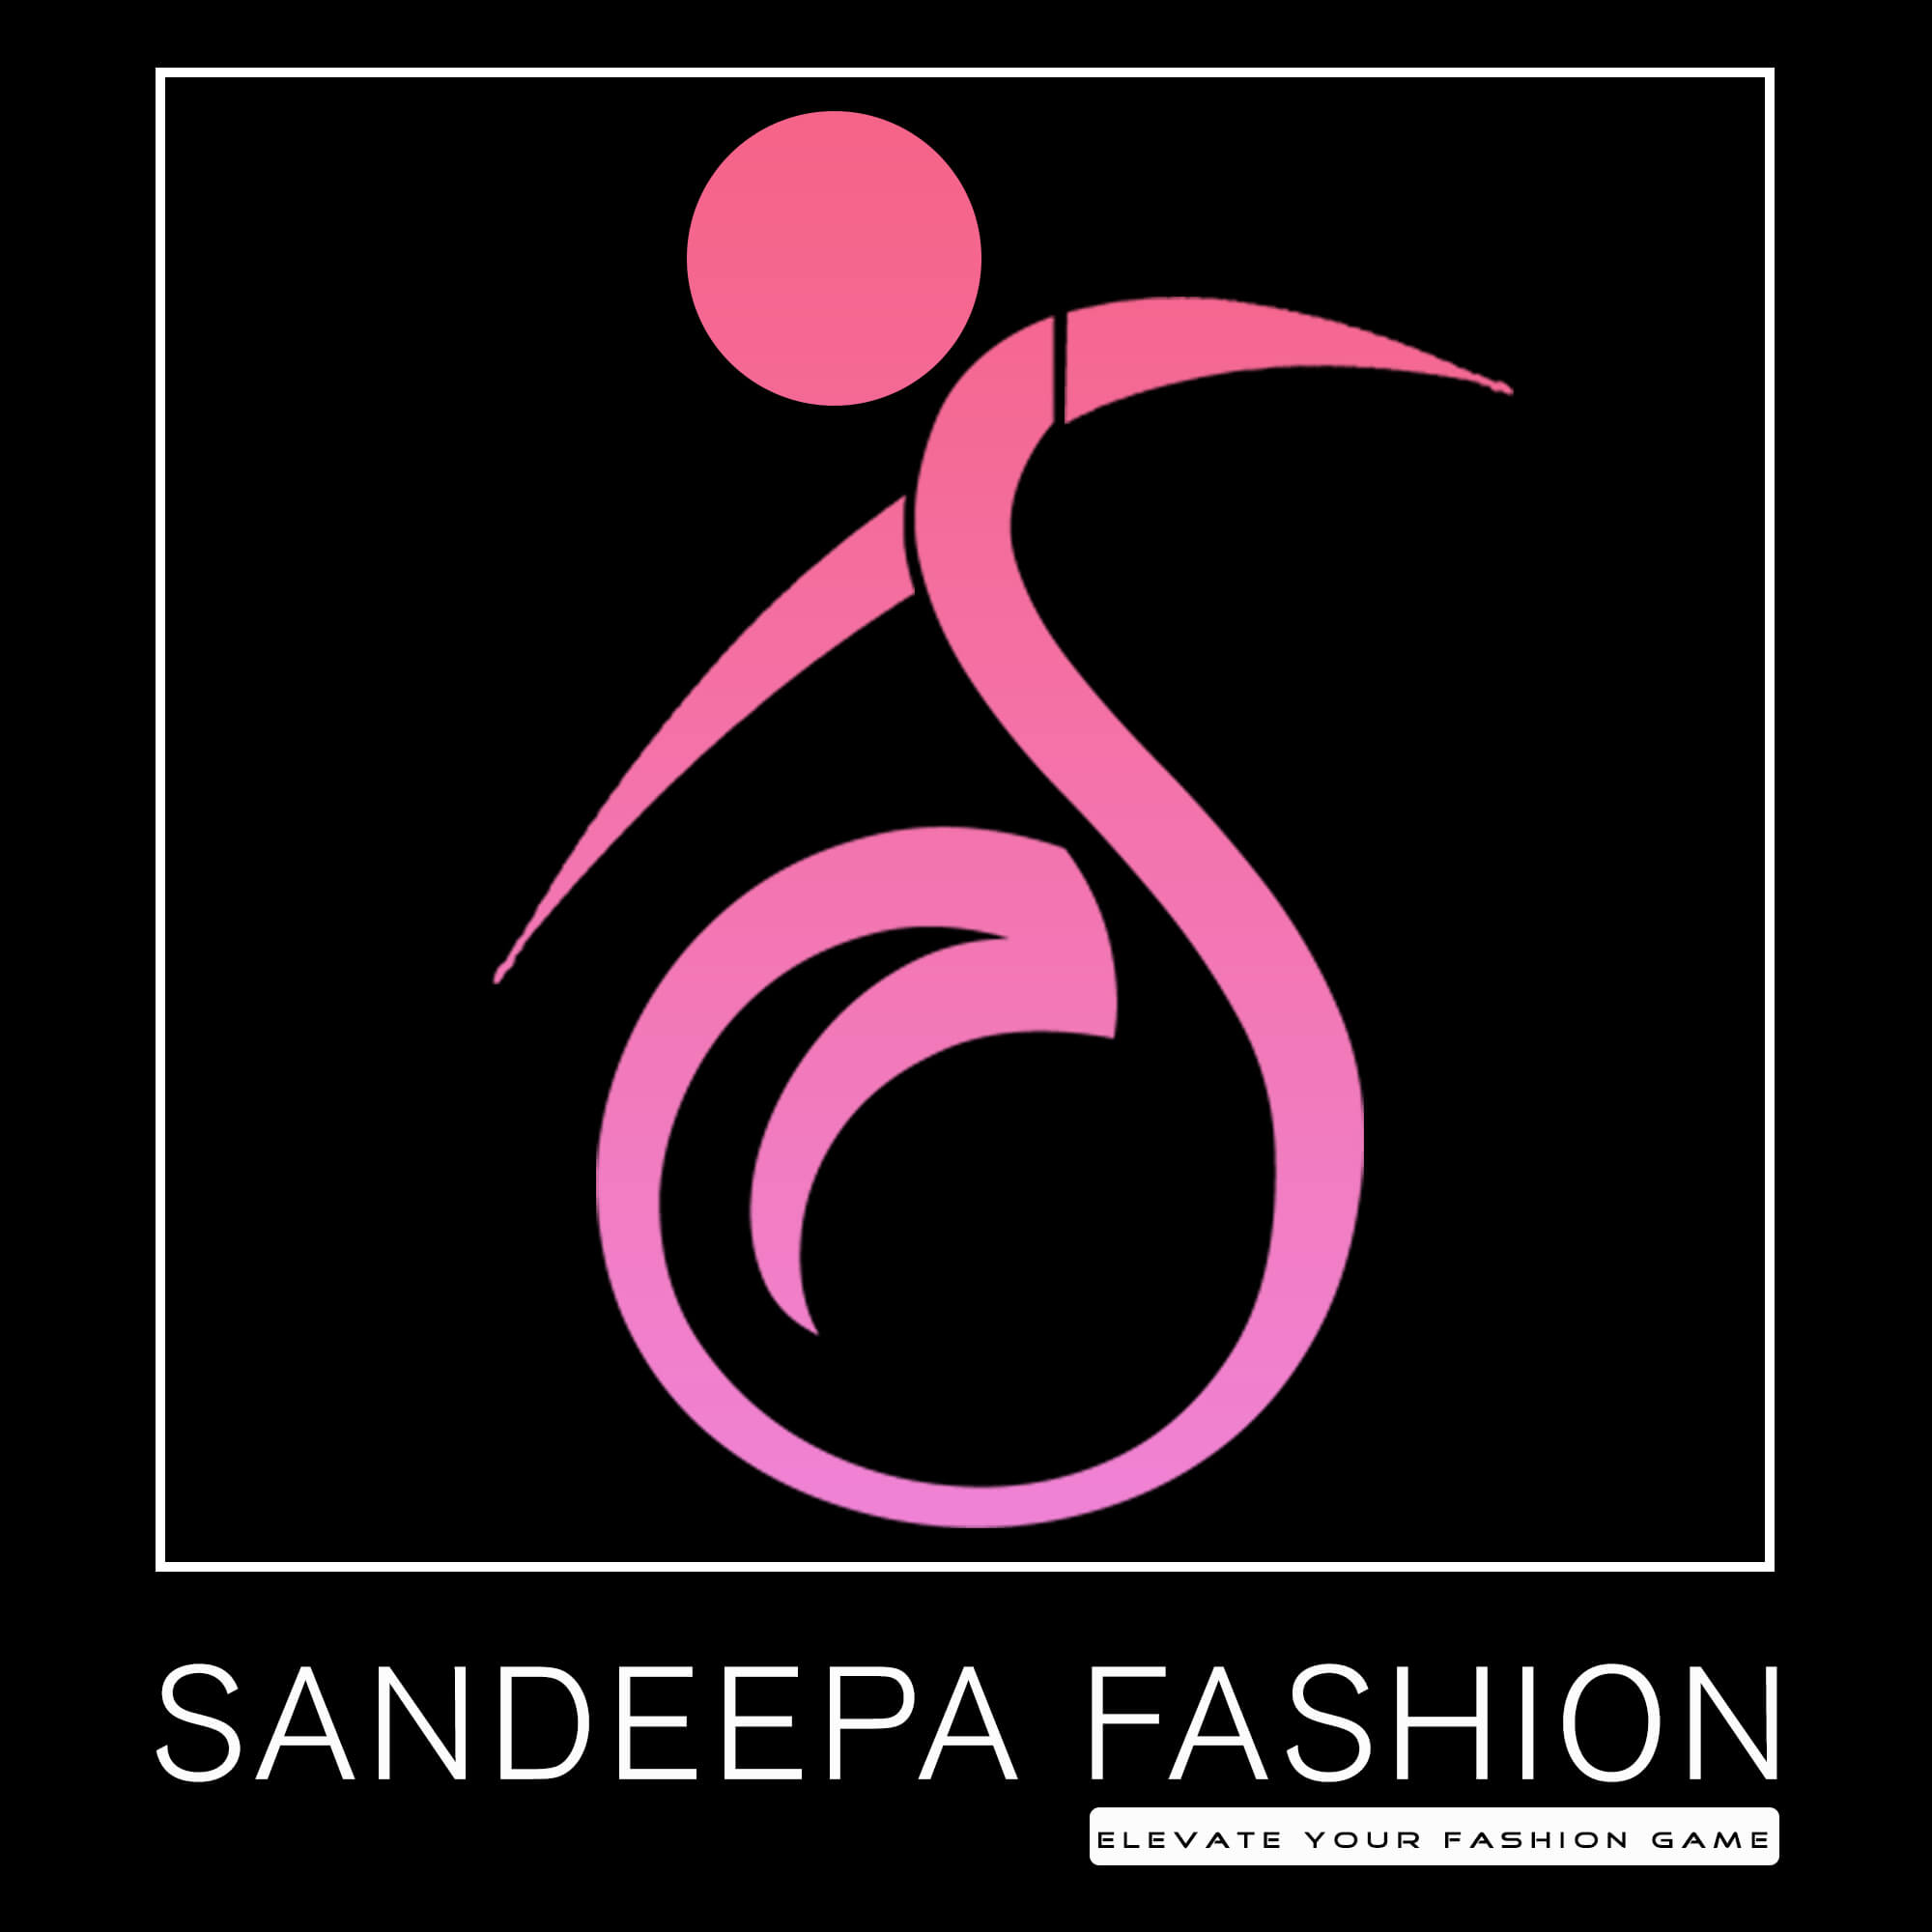 Sandeepa Fashion